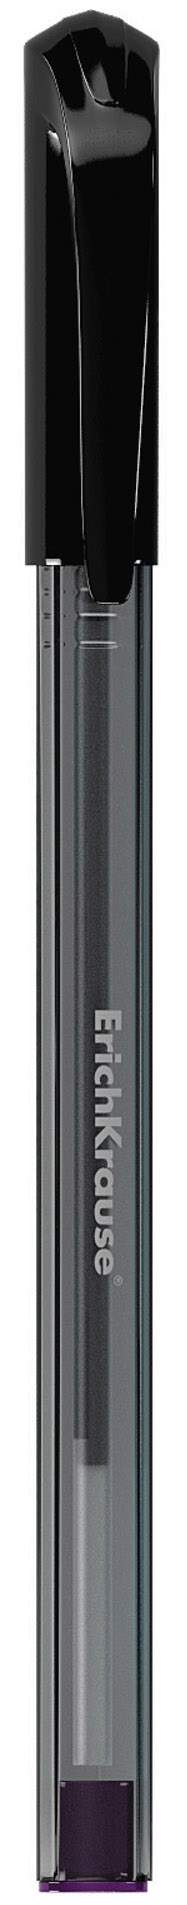 Гелевая ручка ErichKrause U-18 прозрачный корпус черная 12 шт.